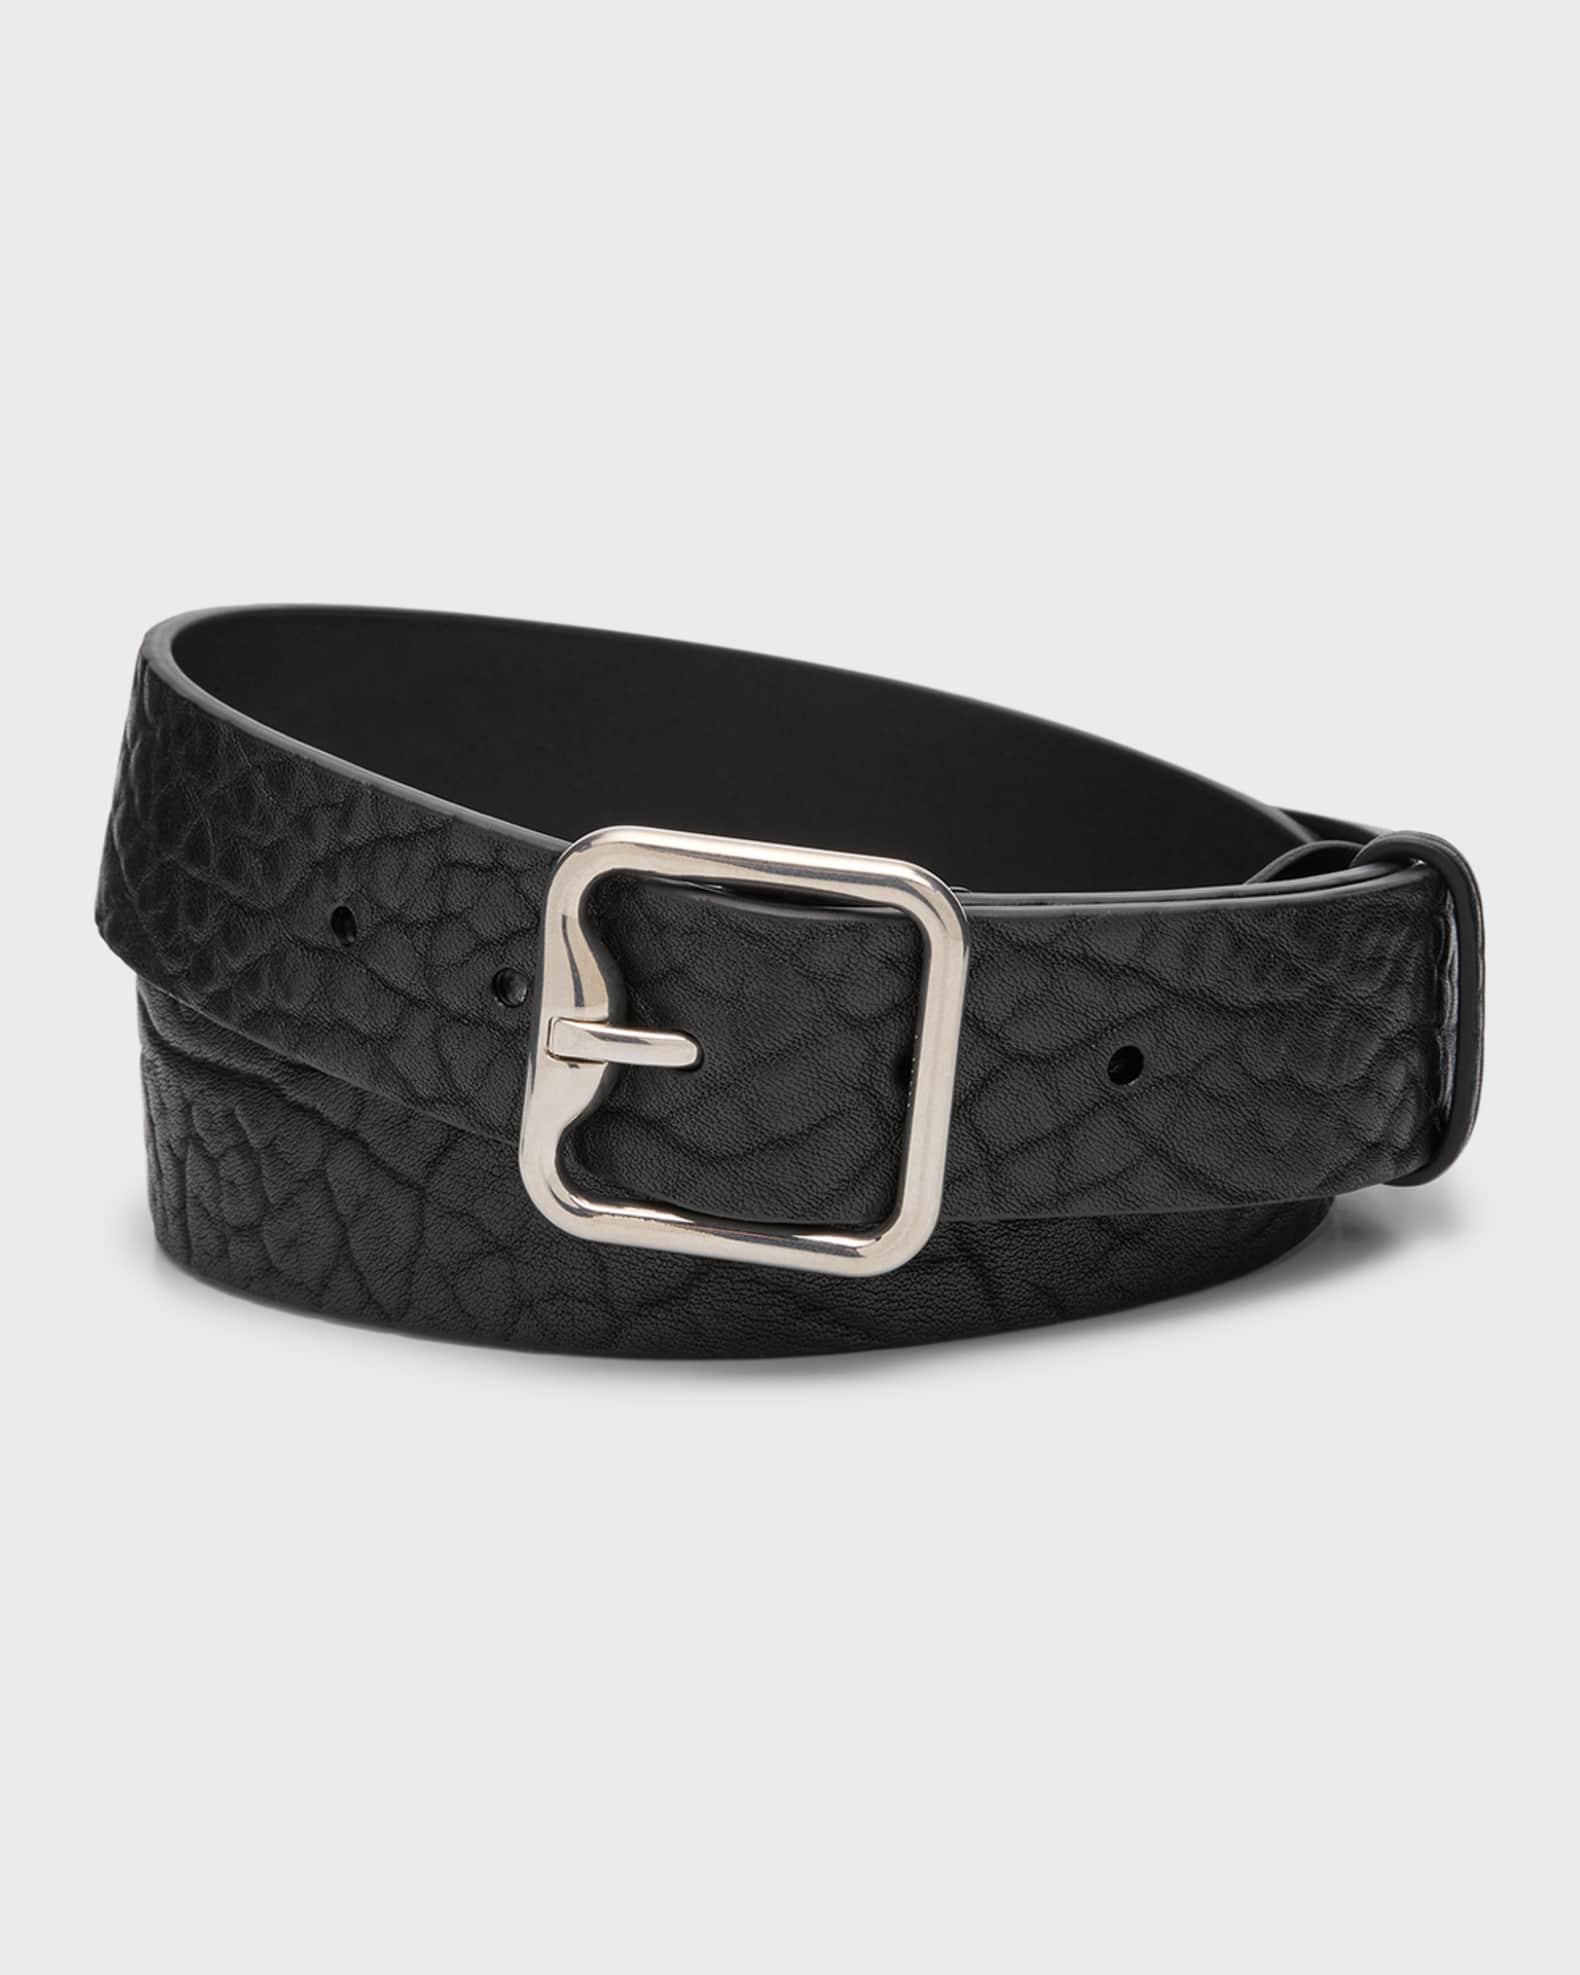 Burberry Men's Leather Belt - Black - Belts